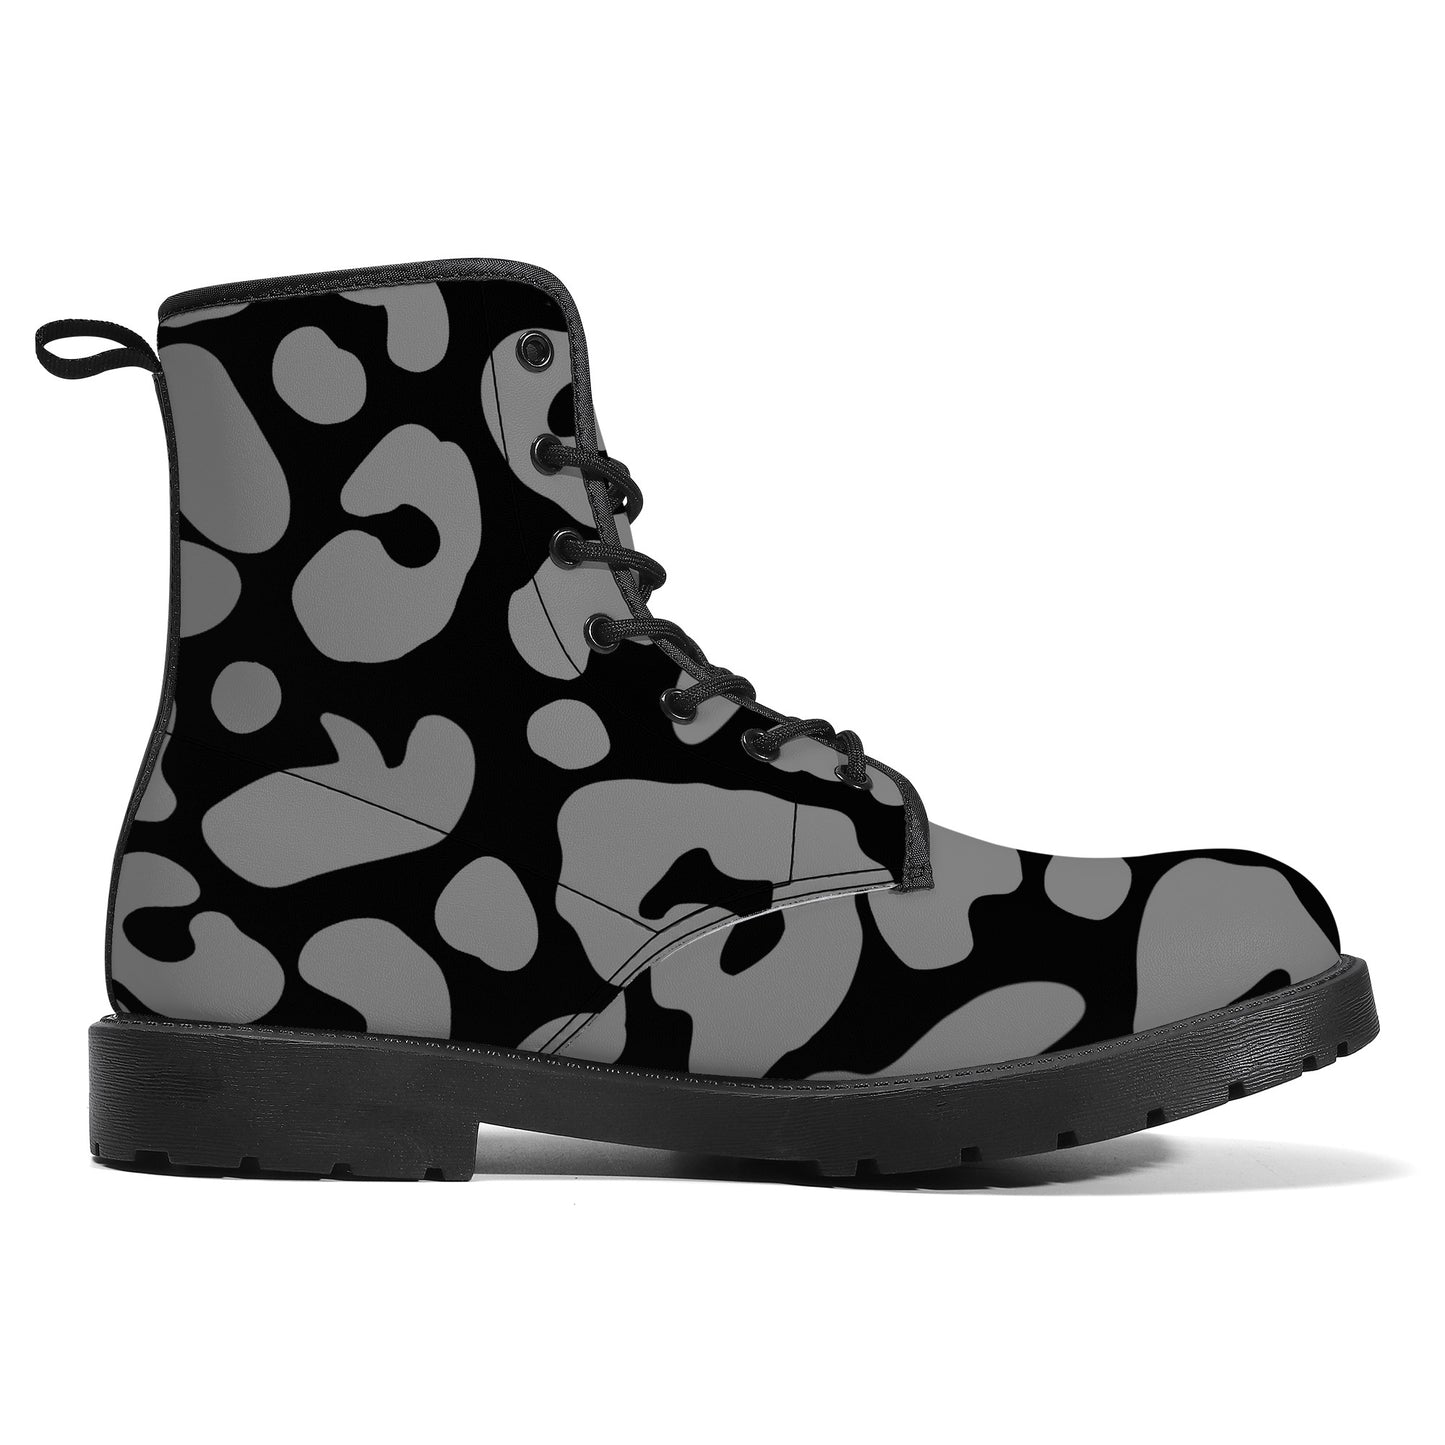 "Mono Leopard" Eco-friendly Boots